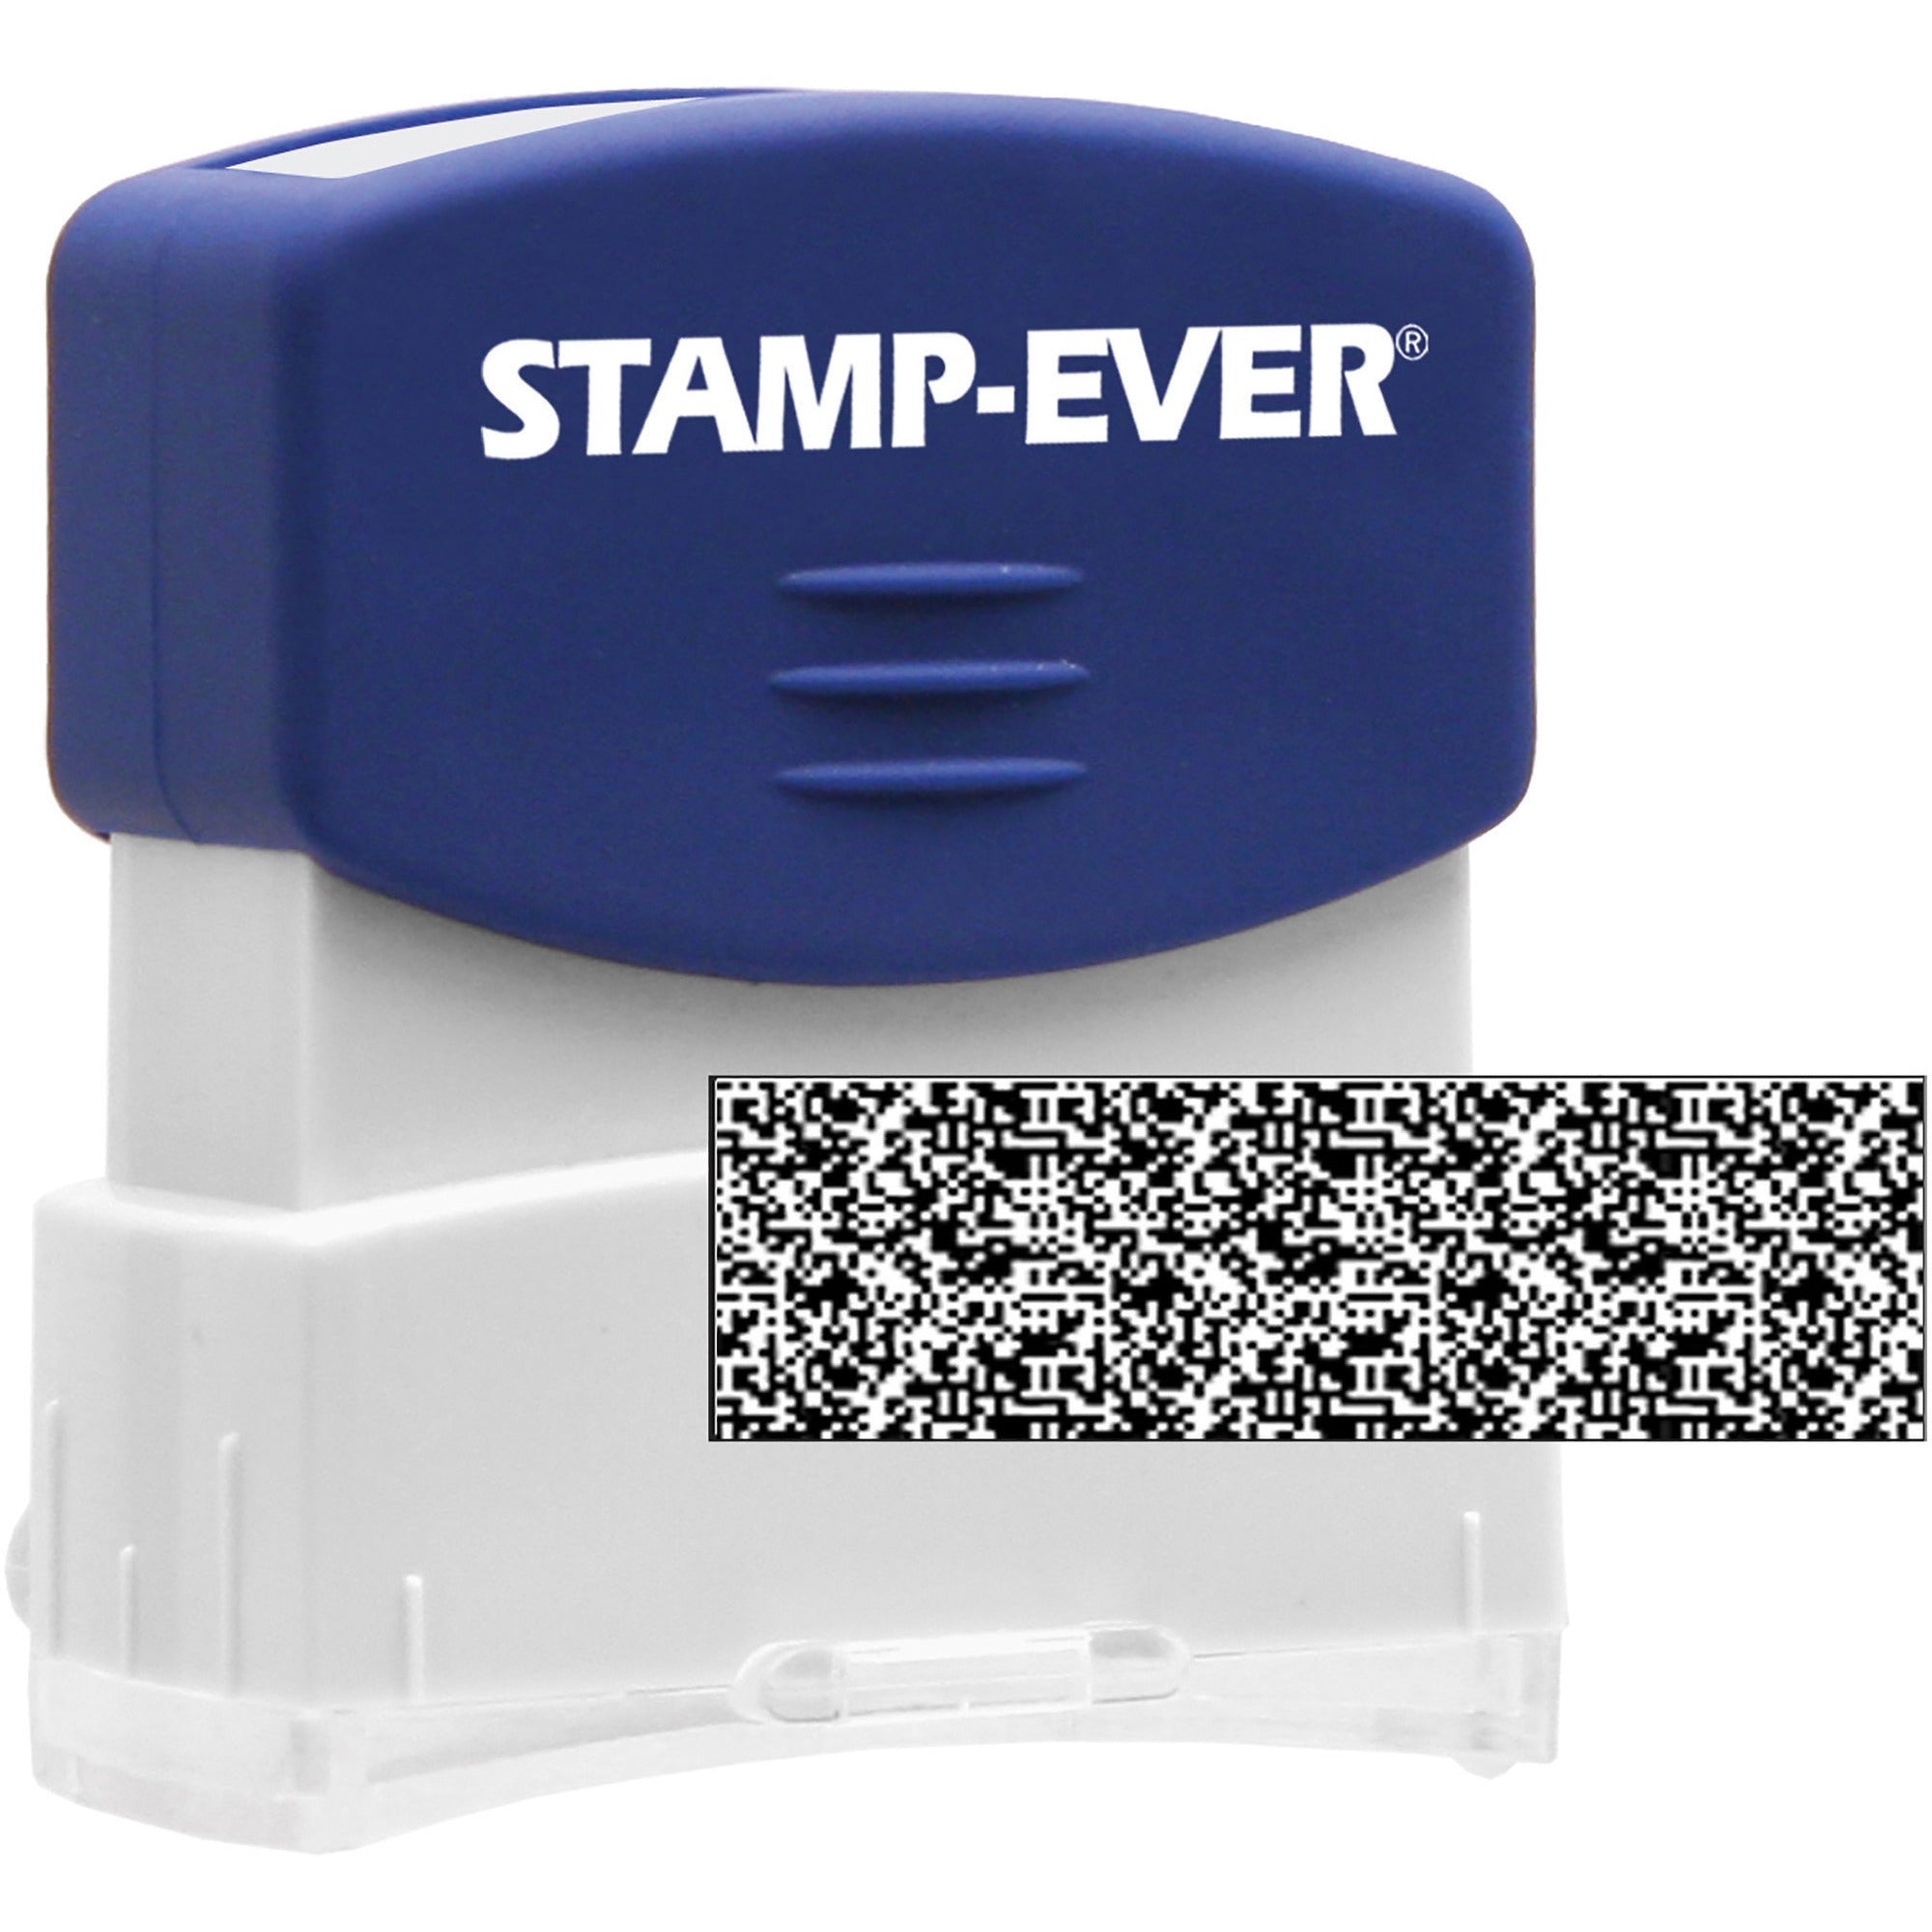 Stamp-Ever Pre-inked Security Block Stamp - 1.69" Impression Width x 0.56" Impression Length - 50000 Impression(s) - Blue - 1 Each - 